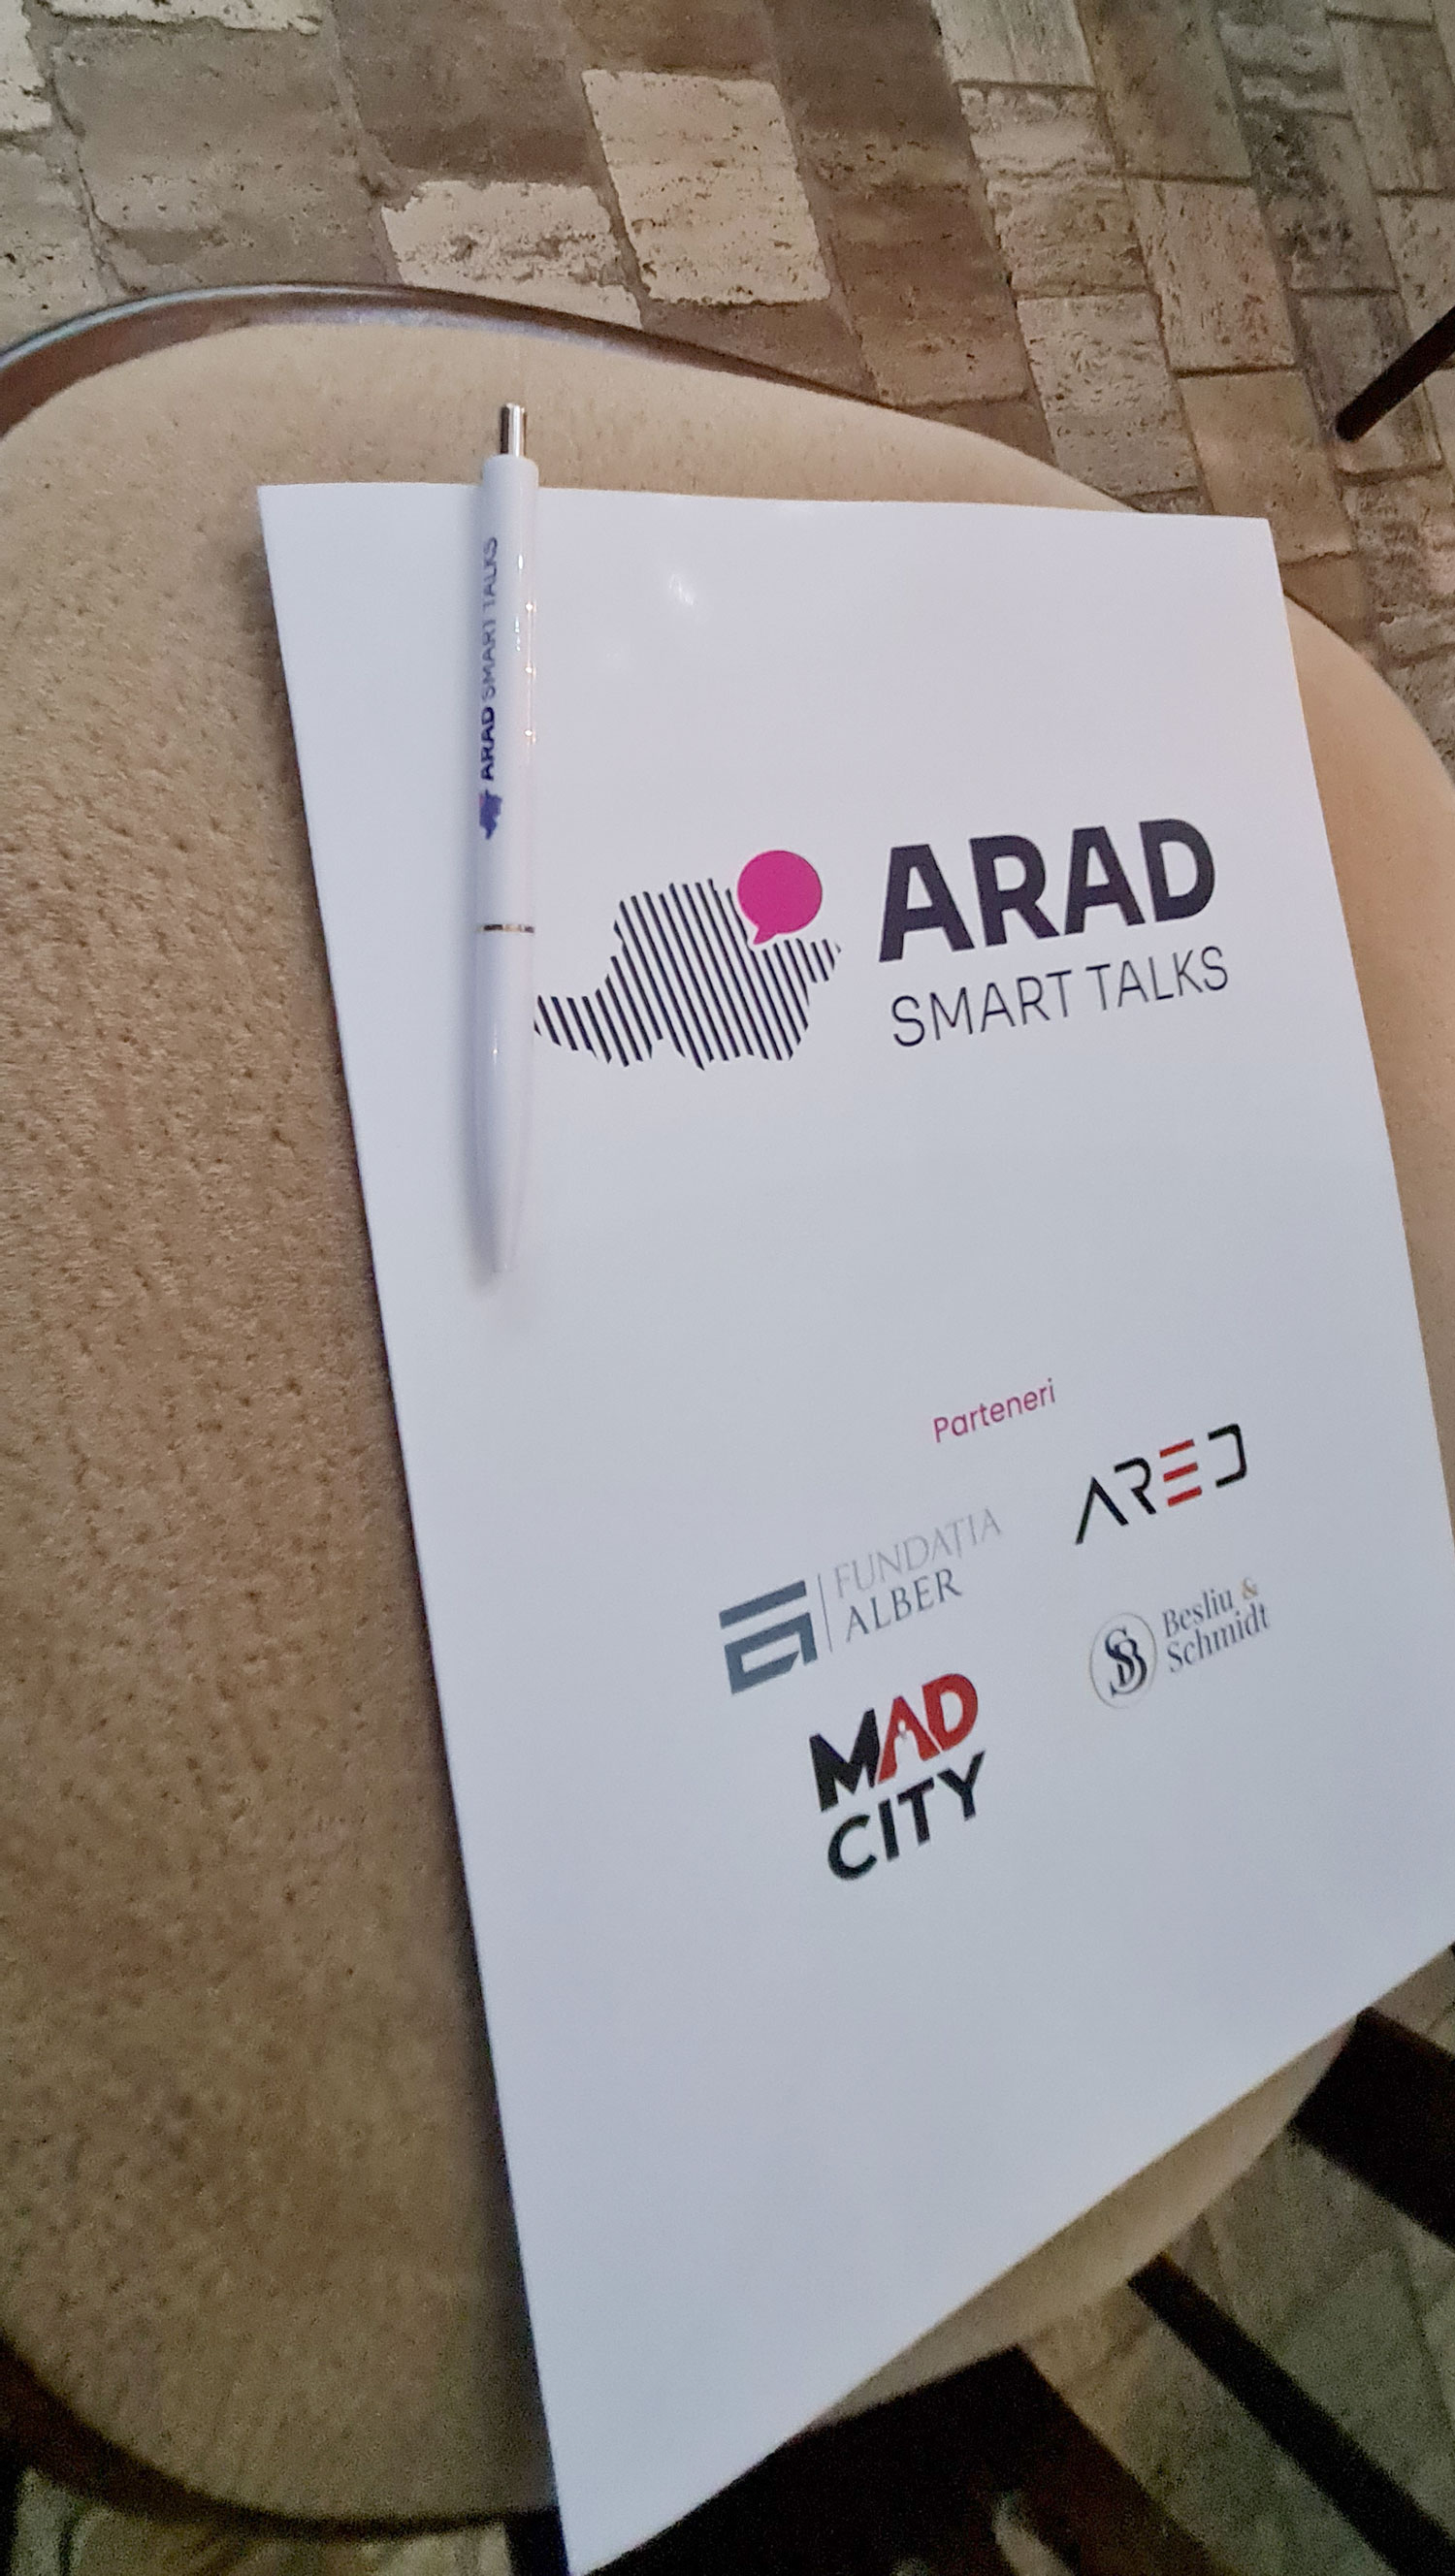 Arad Smartcity